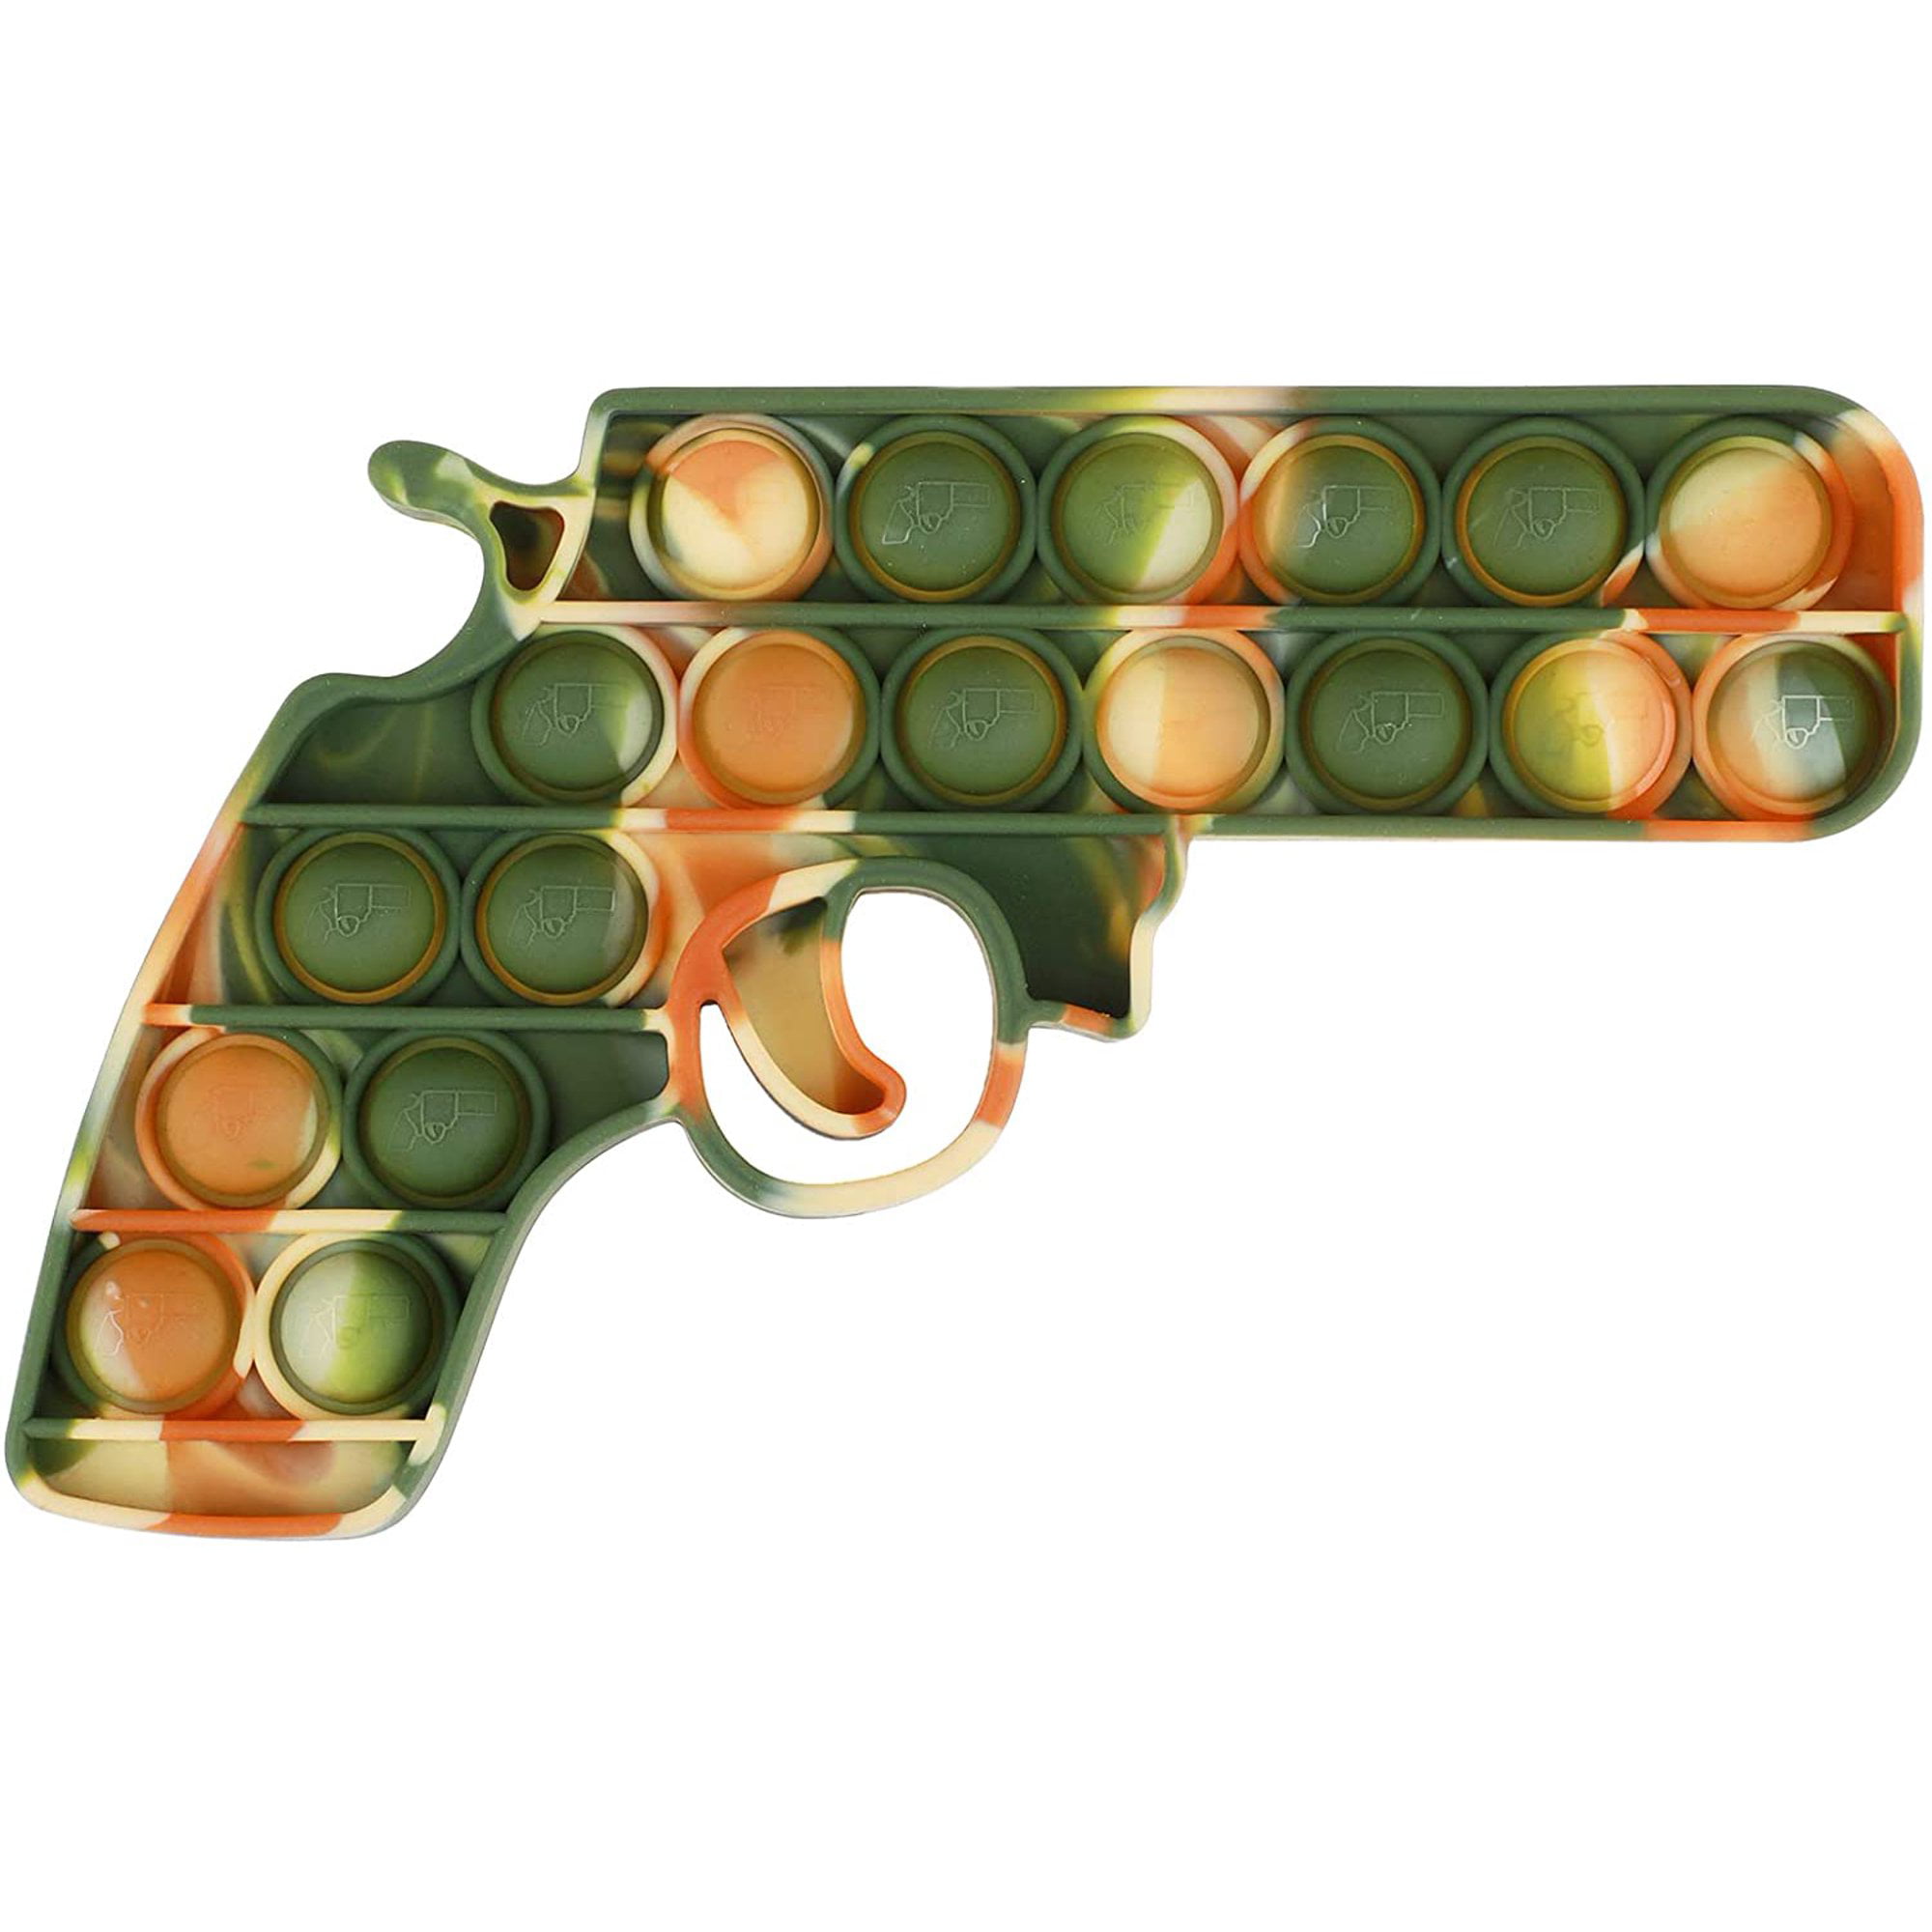 Spud Gun Potato Firing Plastic Toy Children's Gift Pistol Shooter Fun Retro 